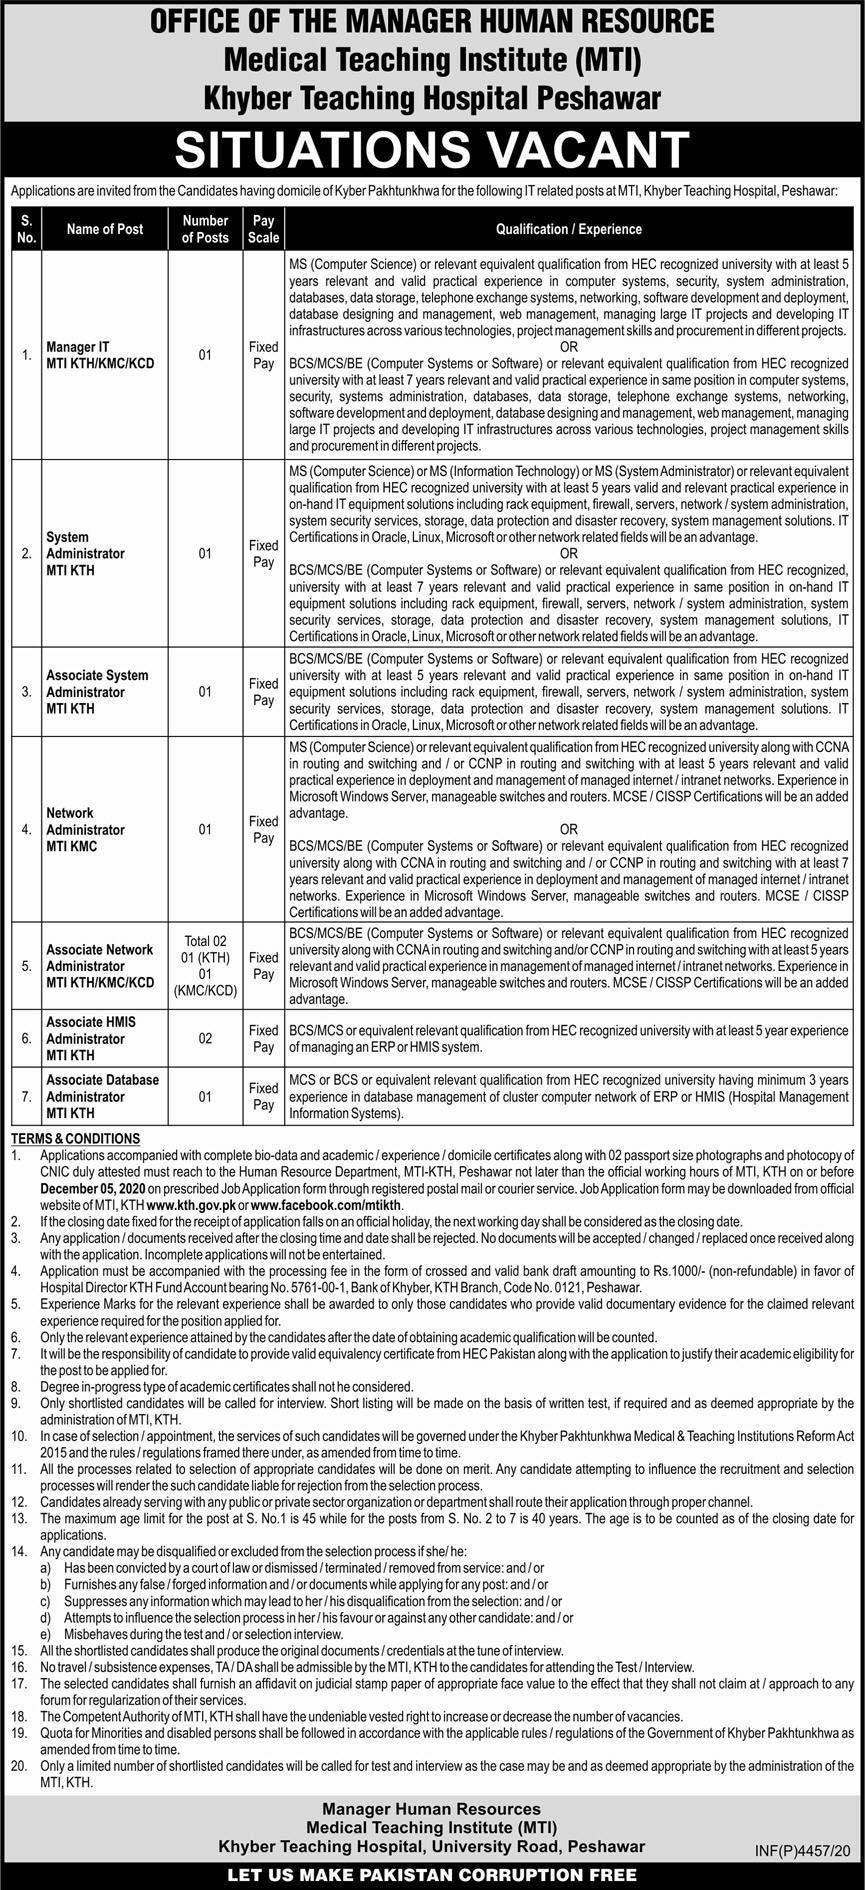 Khyber Teaching Hospital Peshawar Jobs 2020 November Application Form MTI KTH Latest